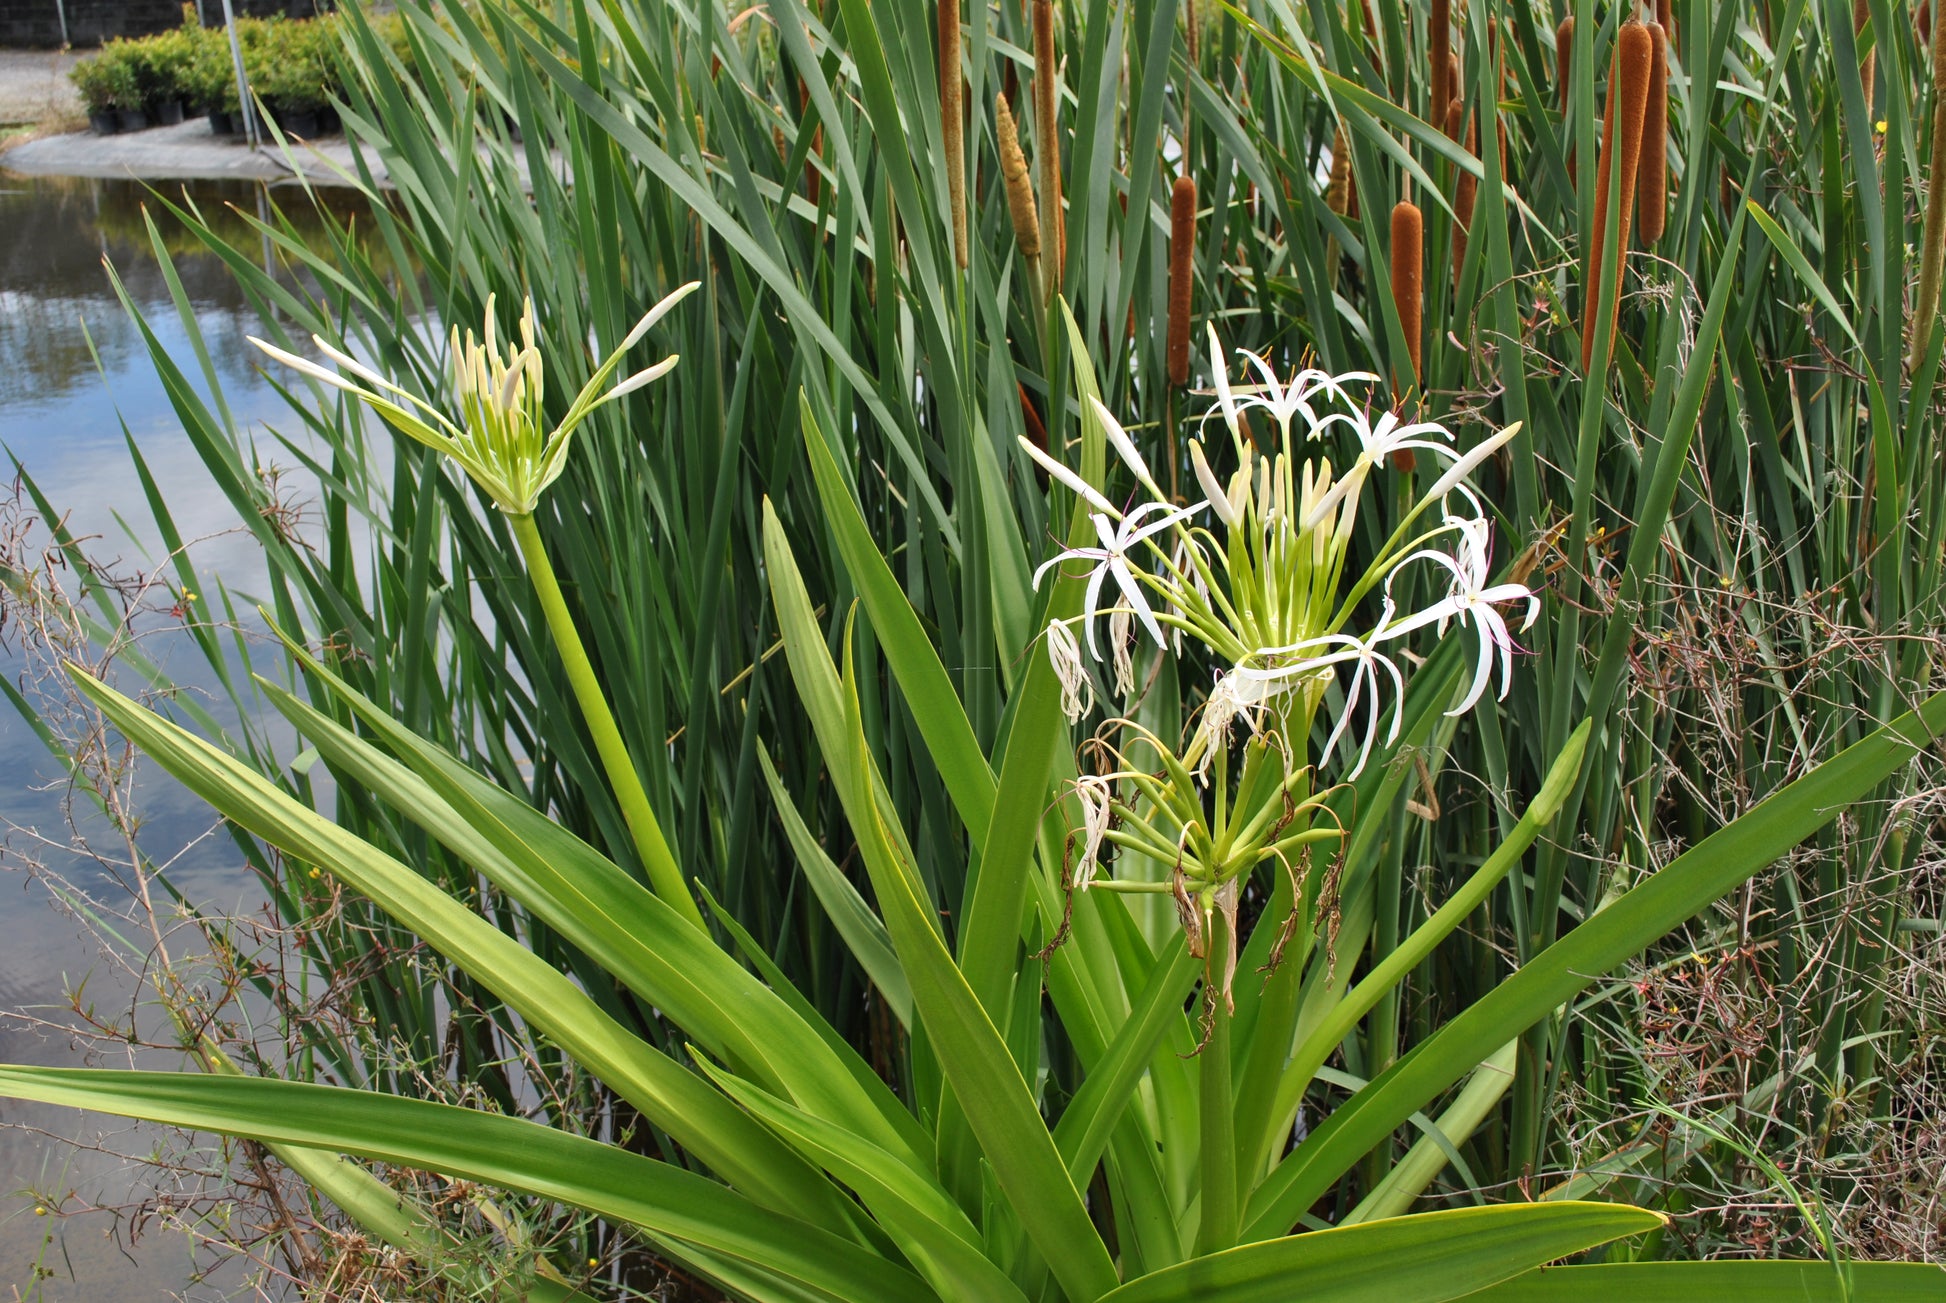 Crinum pedunculatum 'Swamp Lily' in flower on a manmade bank